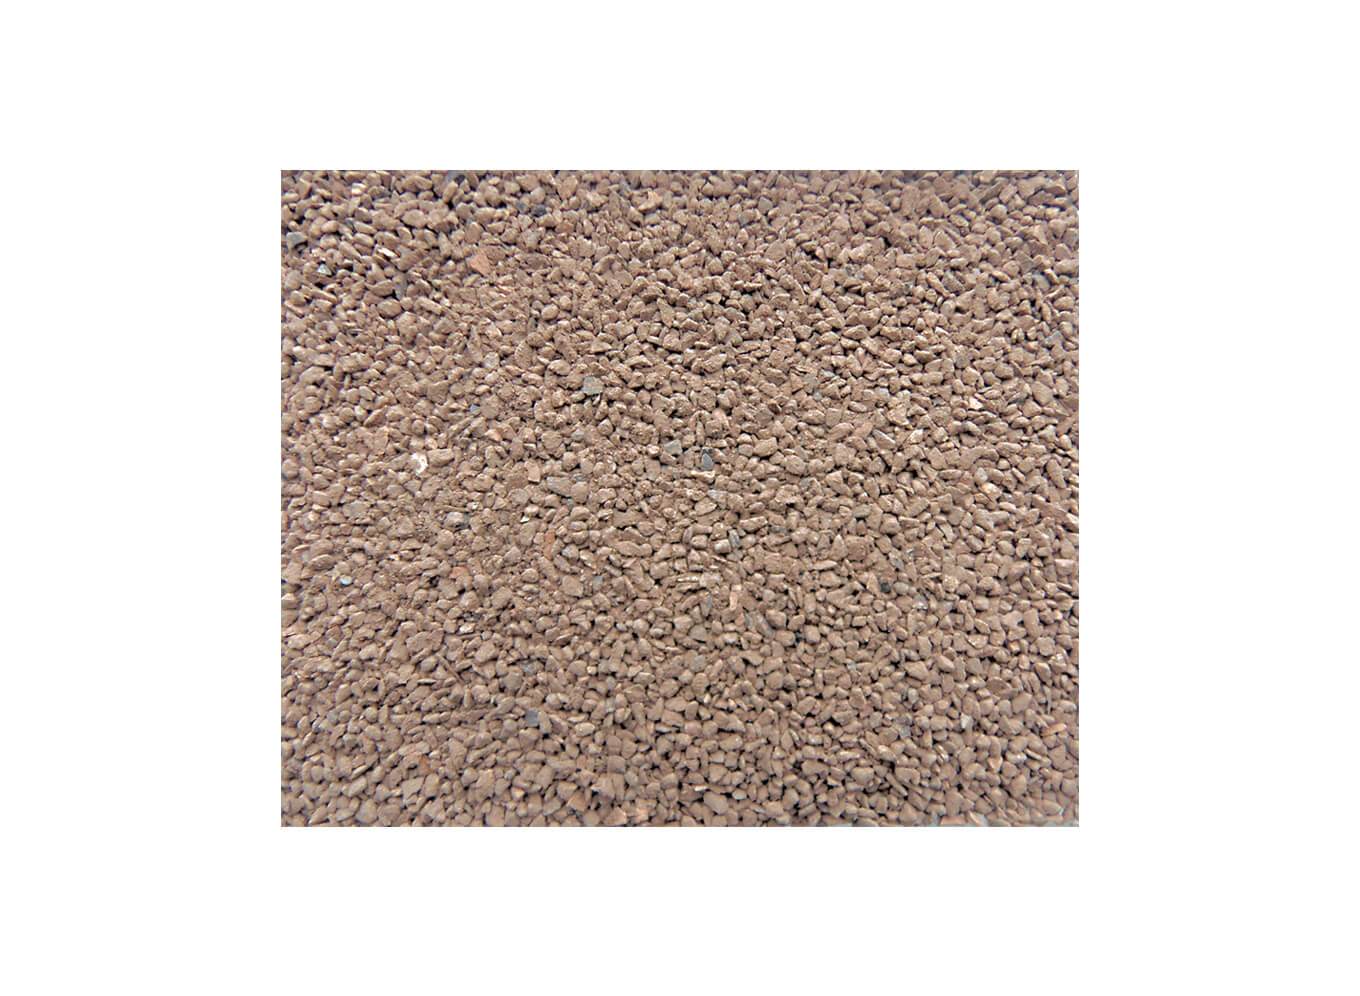 P-Way Ballast, Brown Stone, Medium Grade, Clean